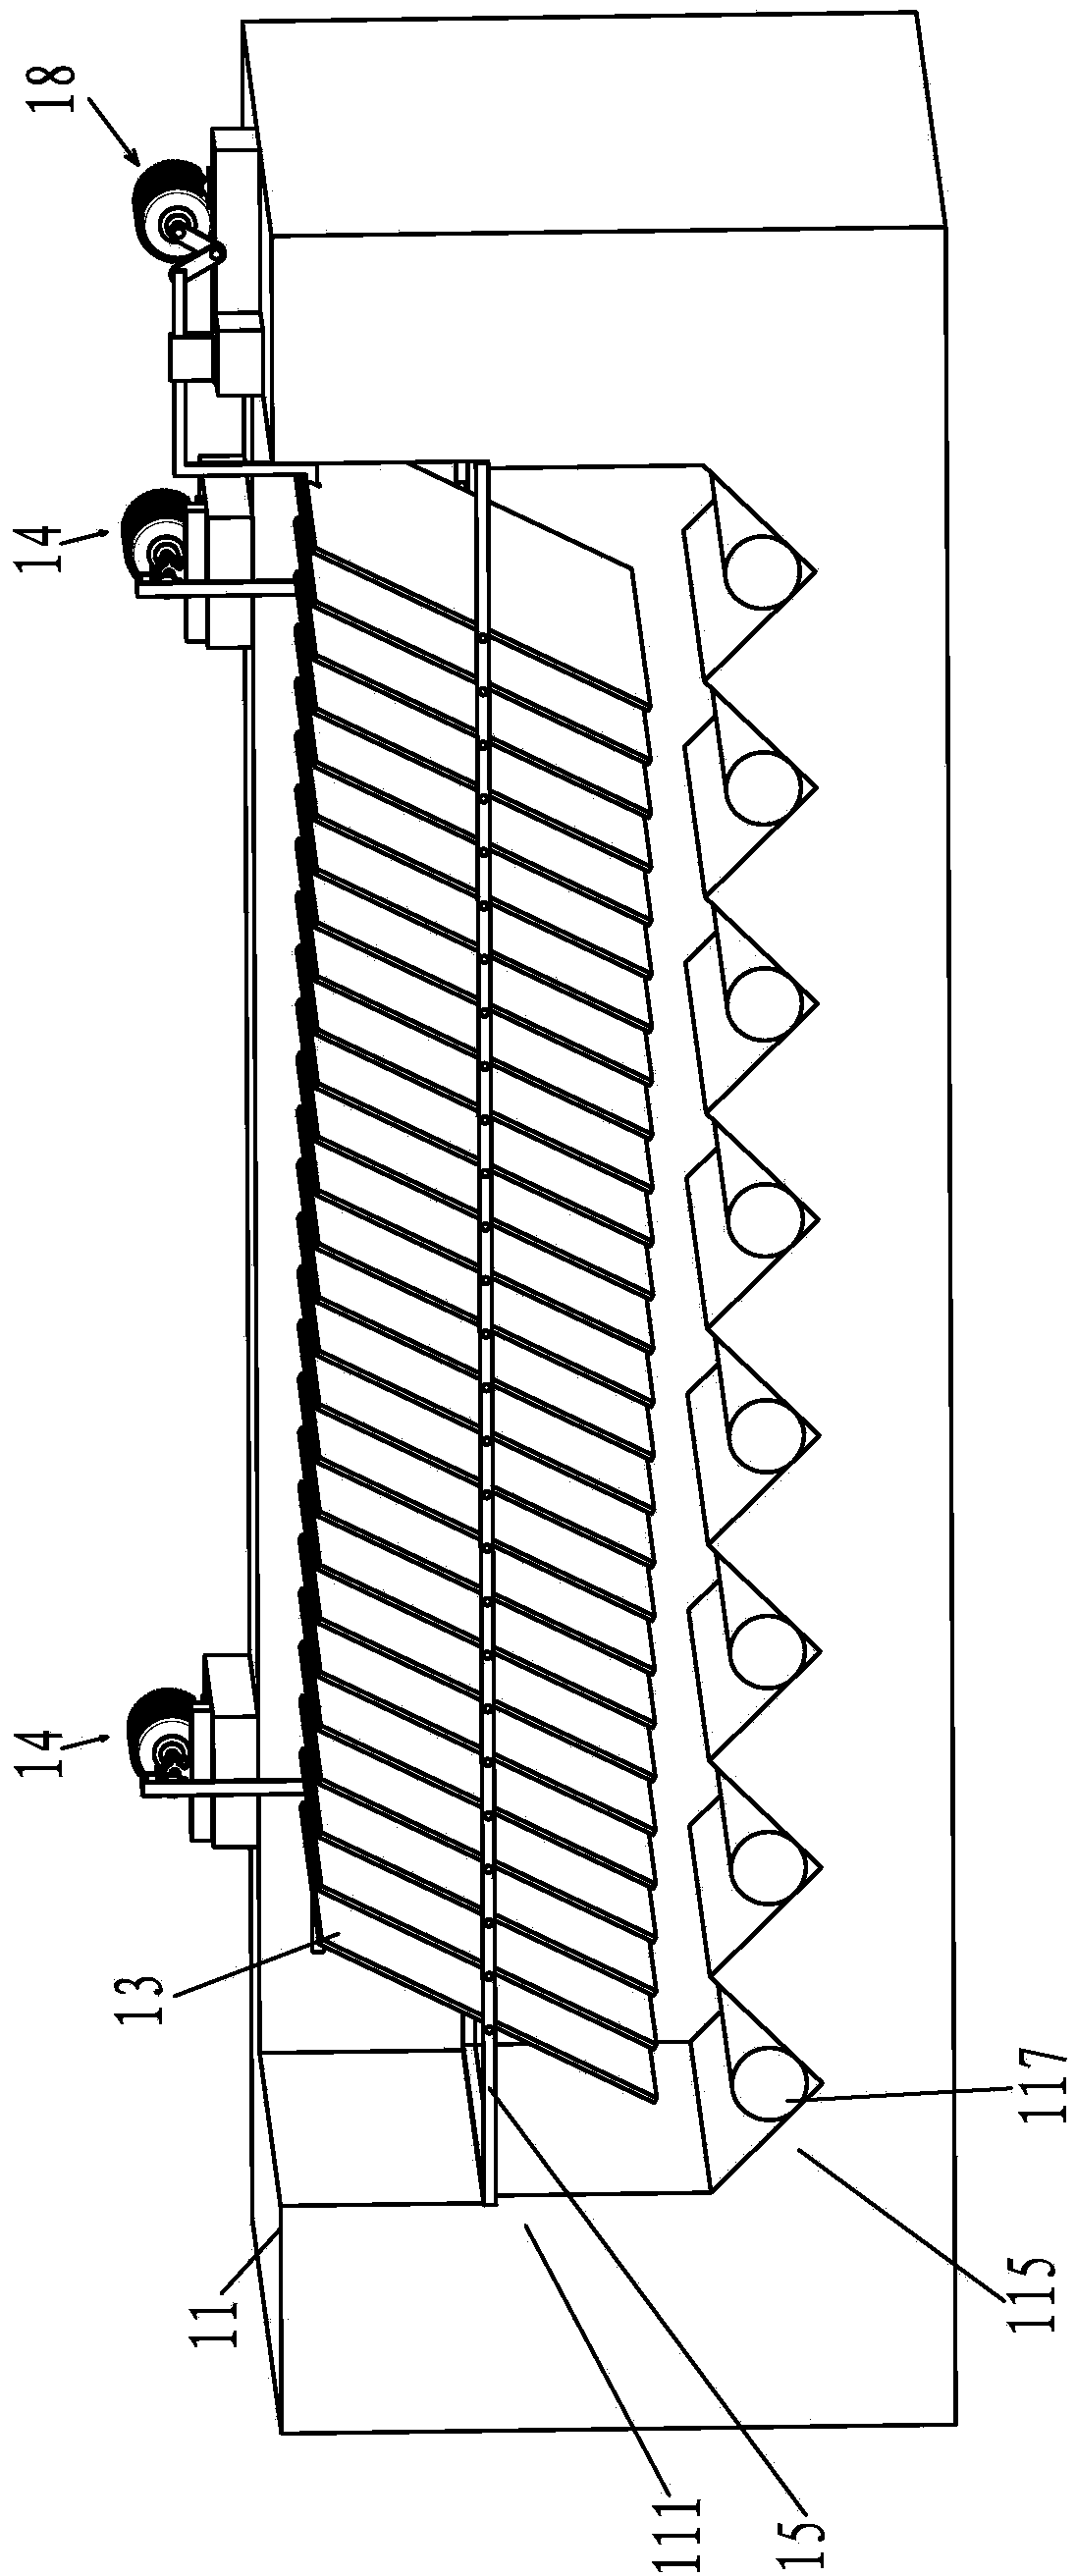 Inclined plate sedimentation tank